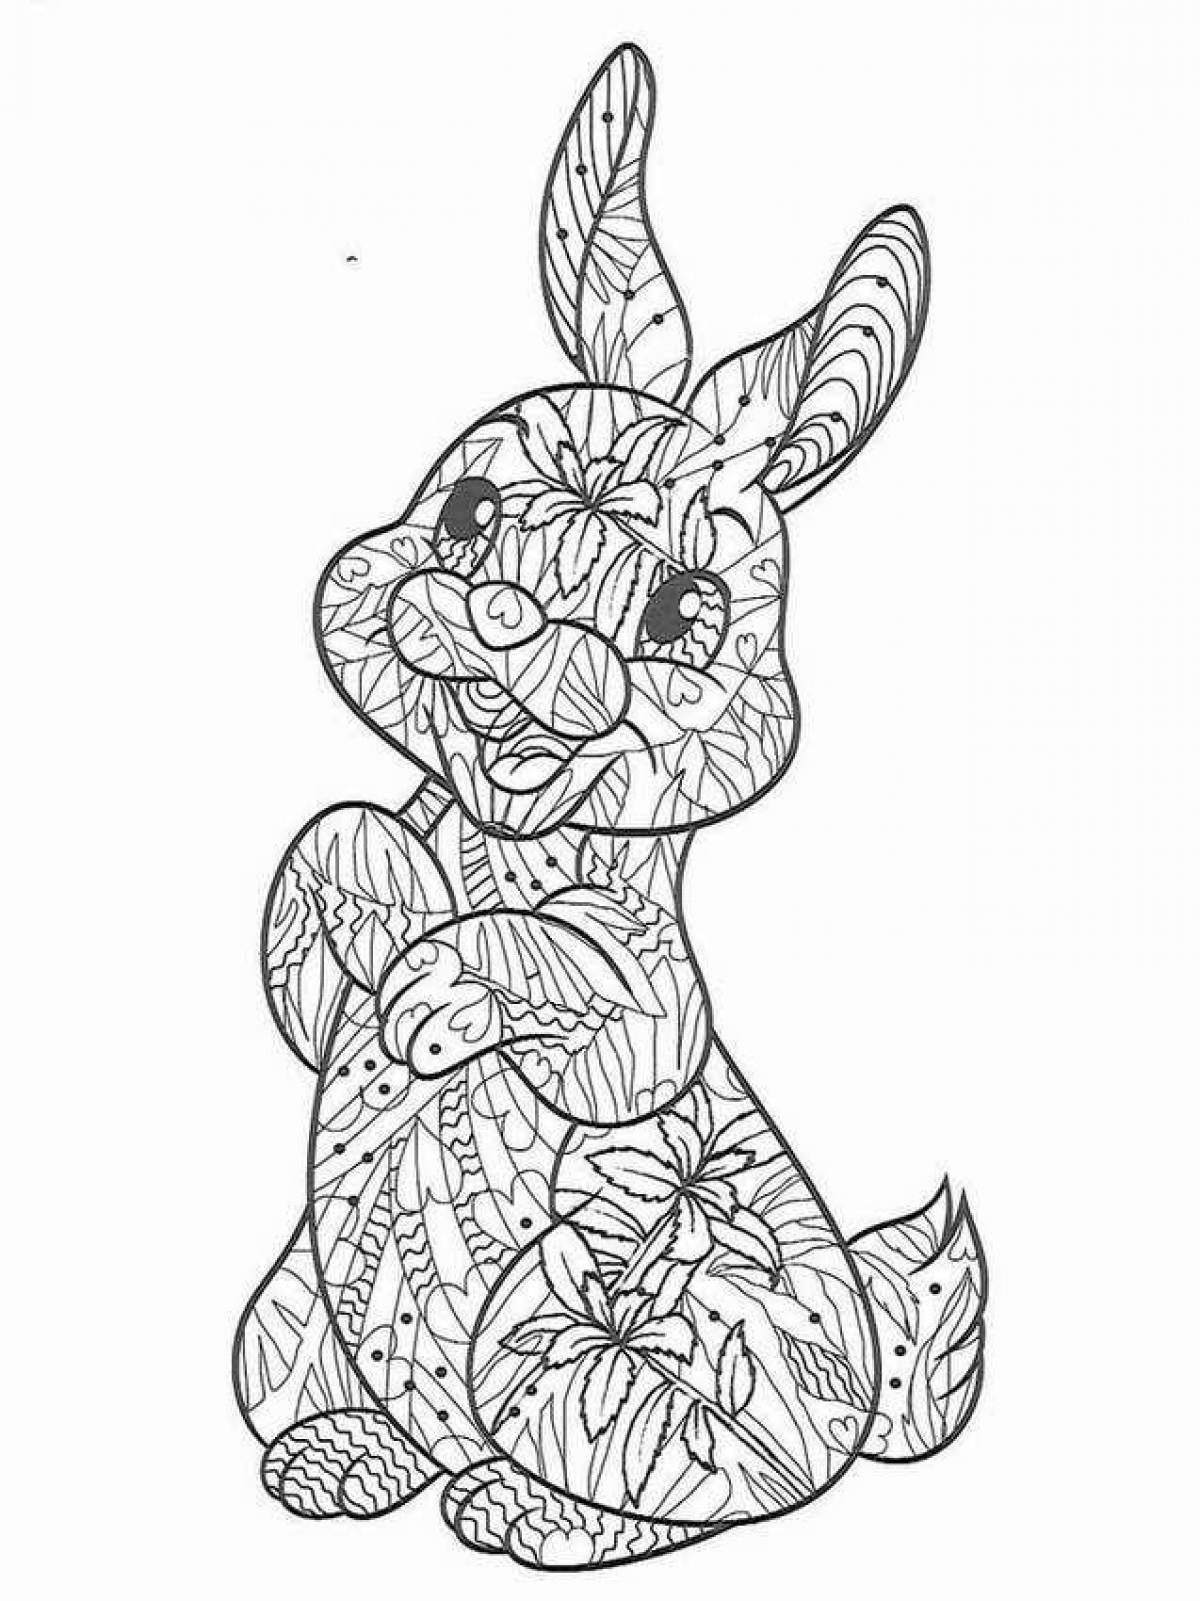 Coloring book joyful anti-stress hare